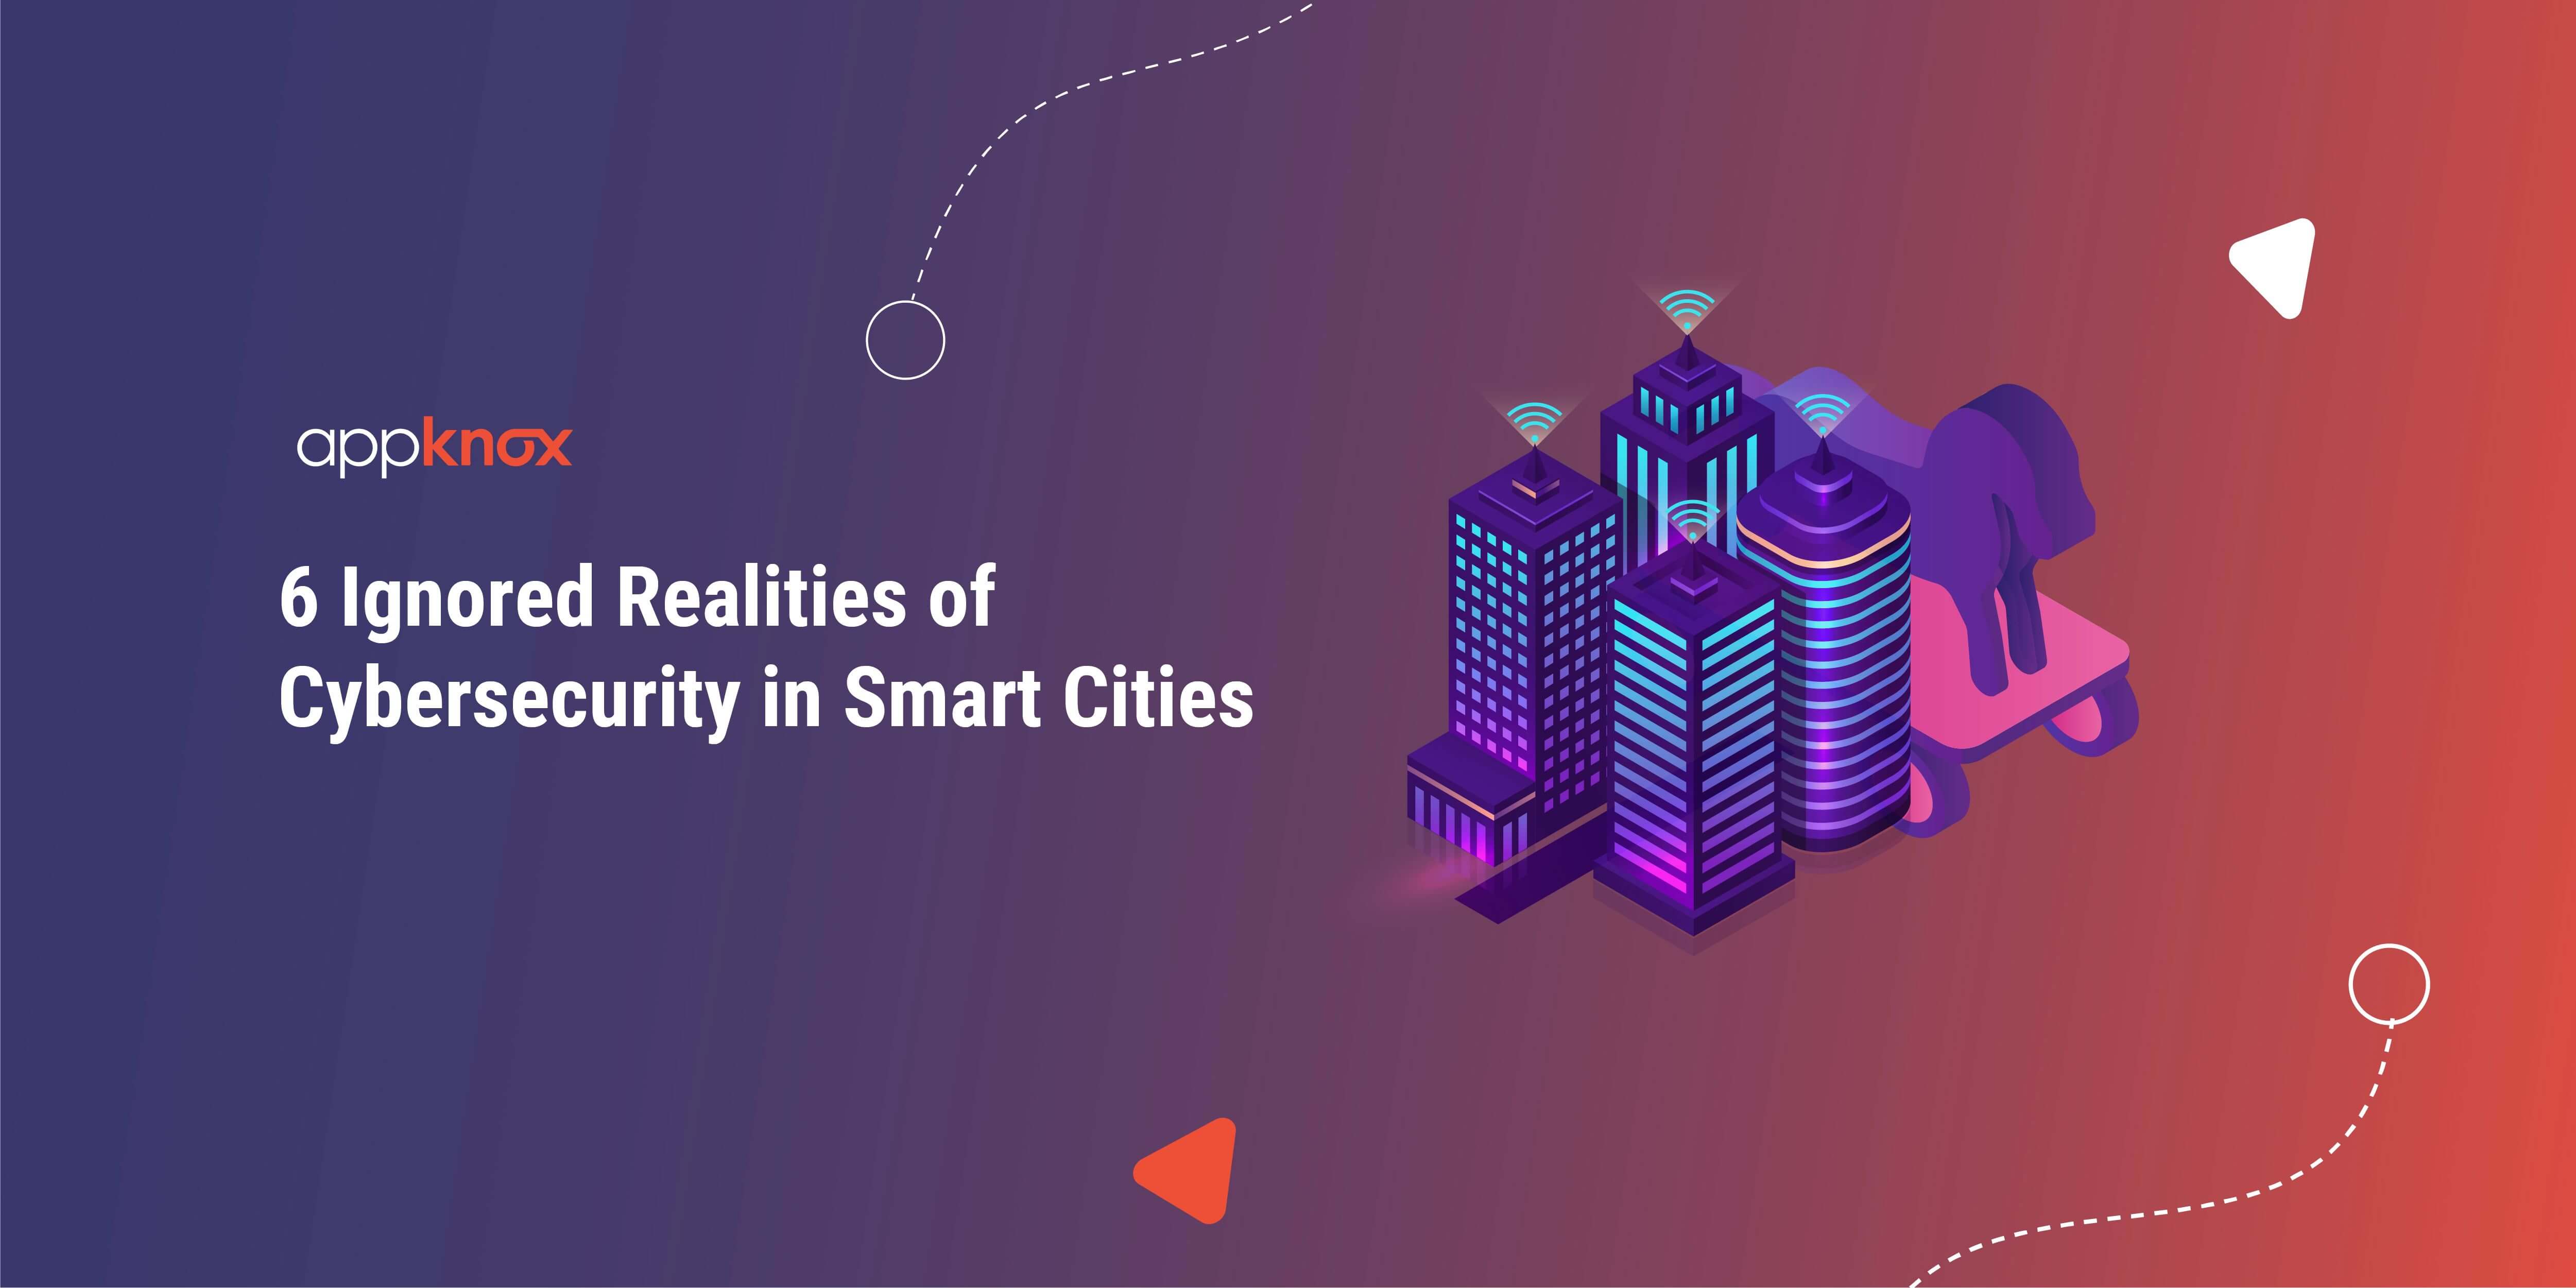 Cybersecurity in smart cities